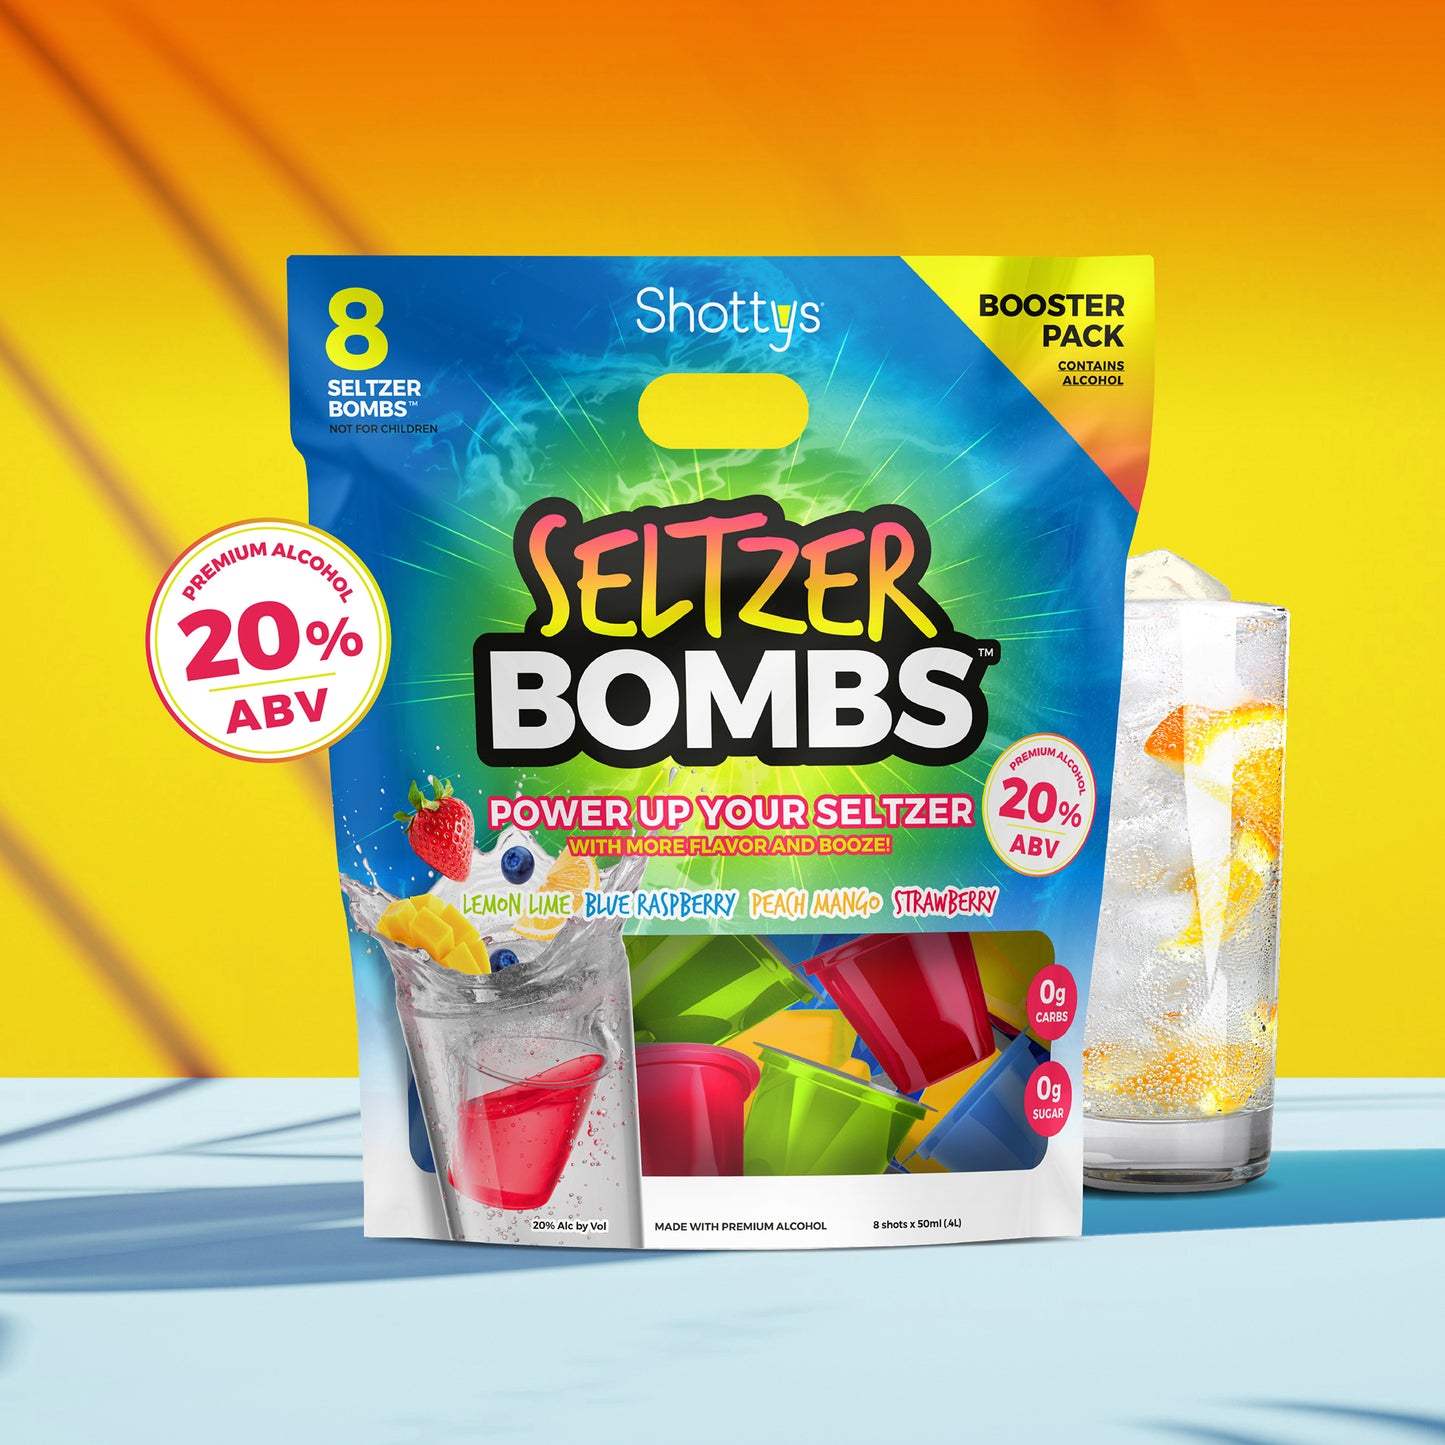 Seltzer Bombs Shots (8 shots)